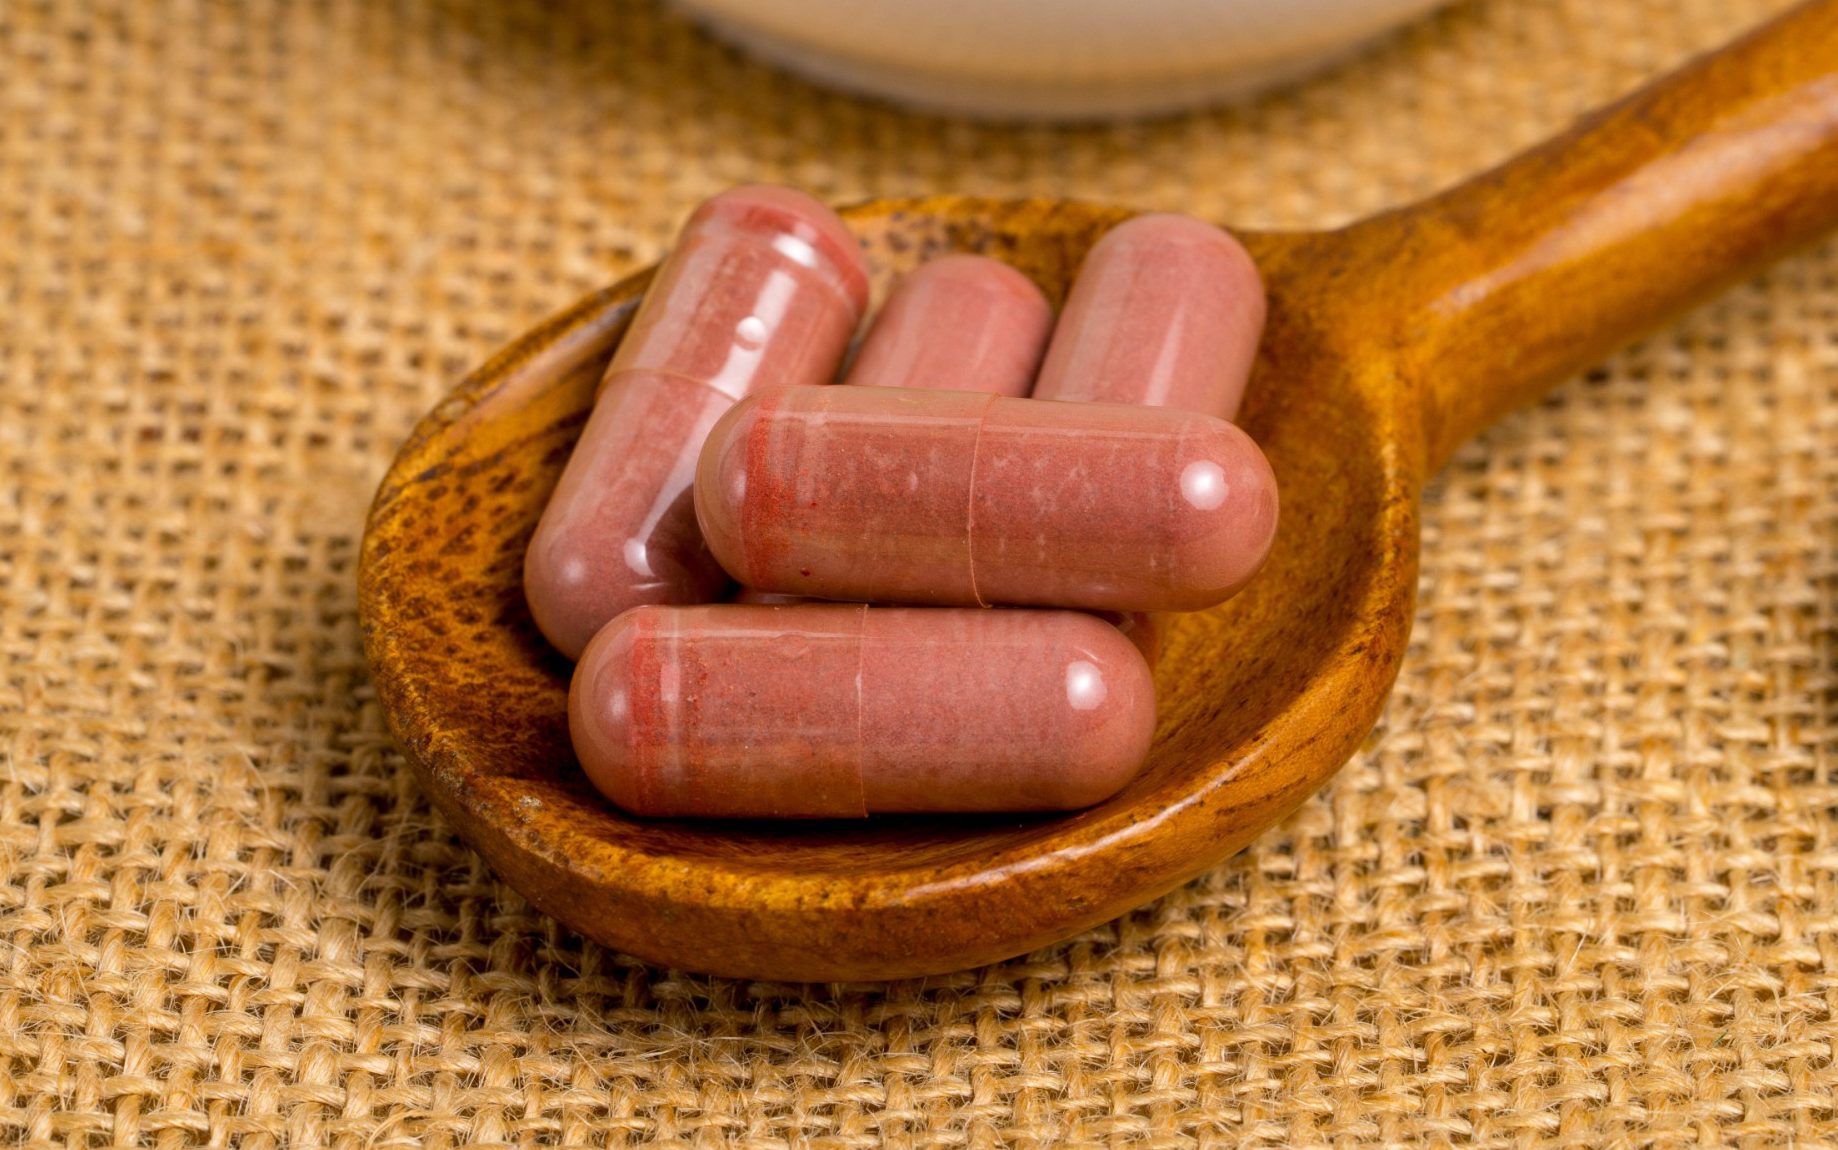 four people die in japan after ‘eating cholesterol-lowering supplement’